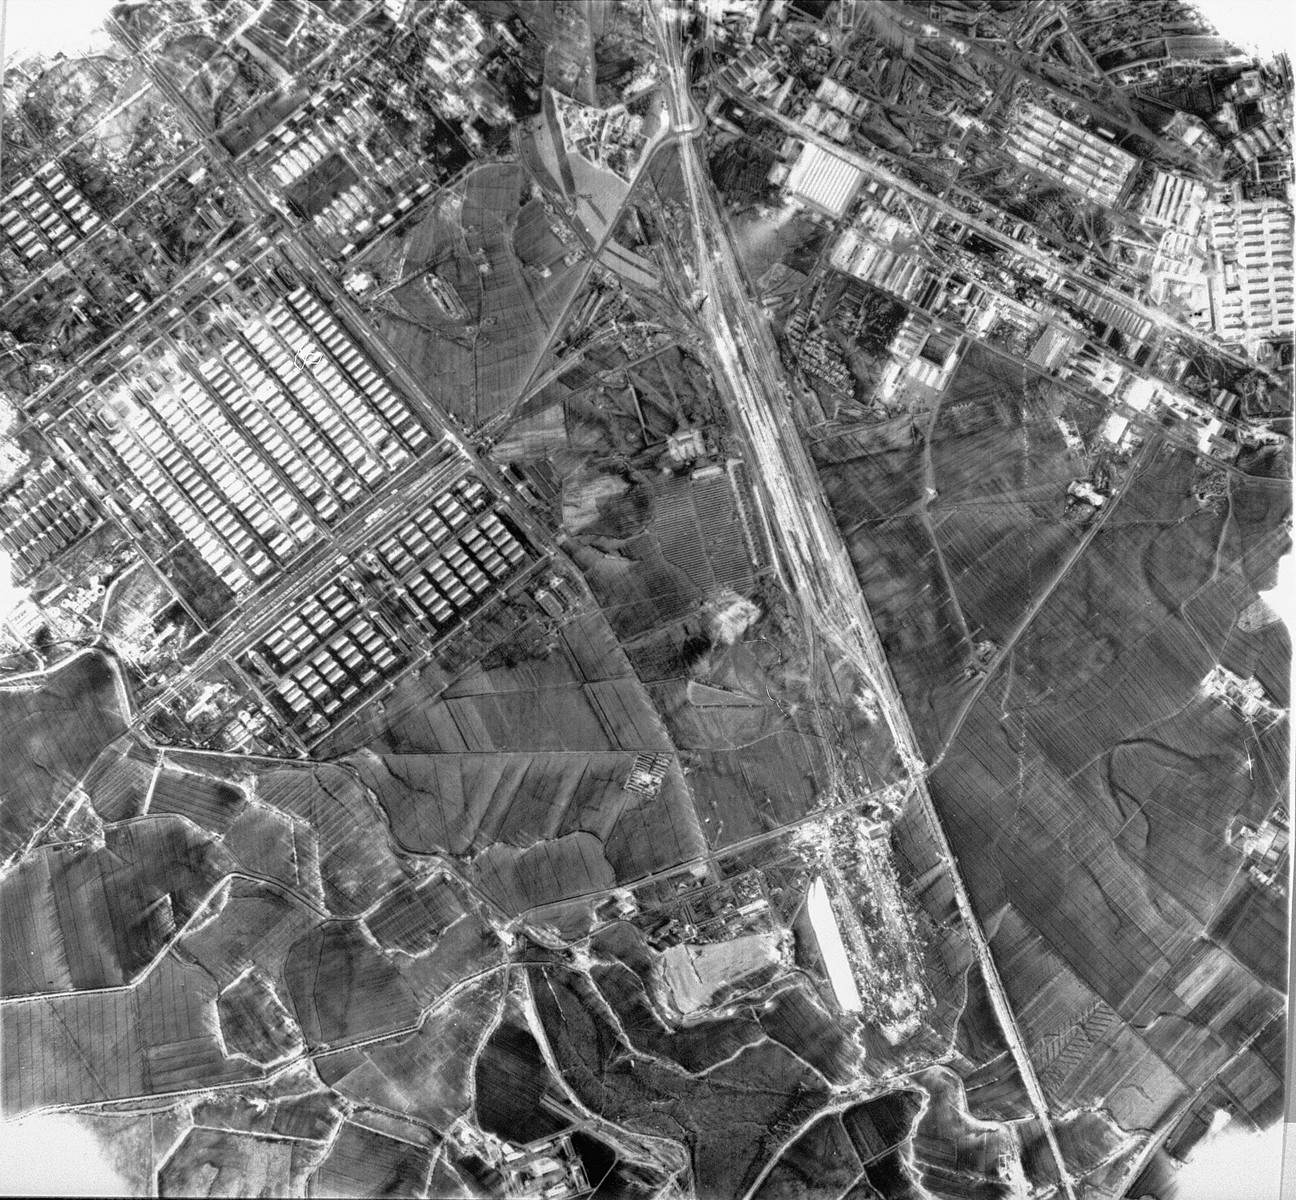 An aerial reconnaissance photograph showing Auschwitz II (Birkenau). [oversized photograph]